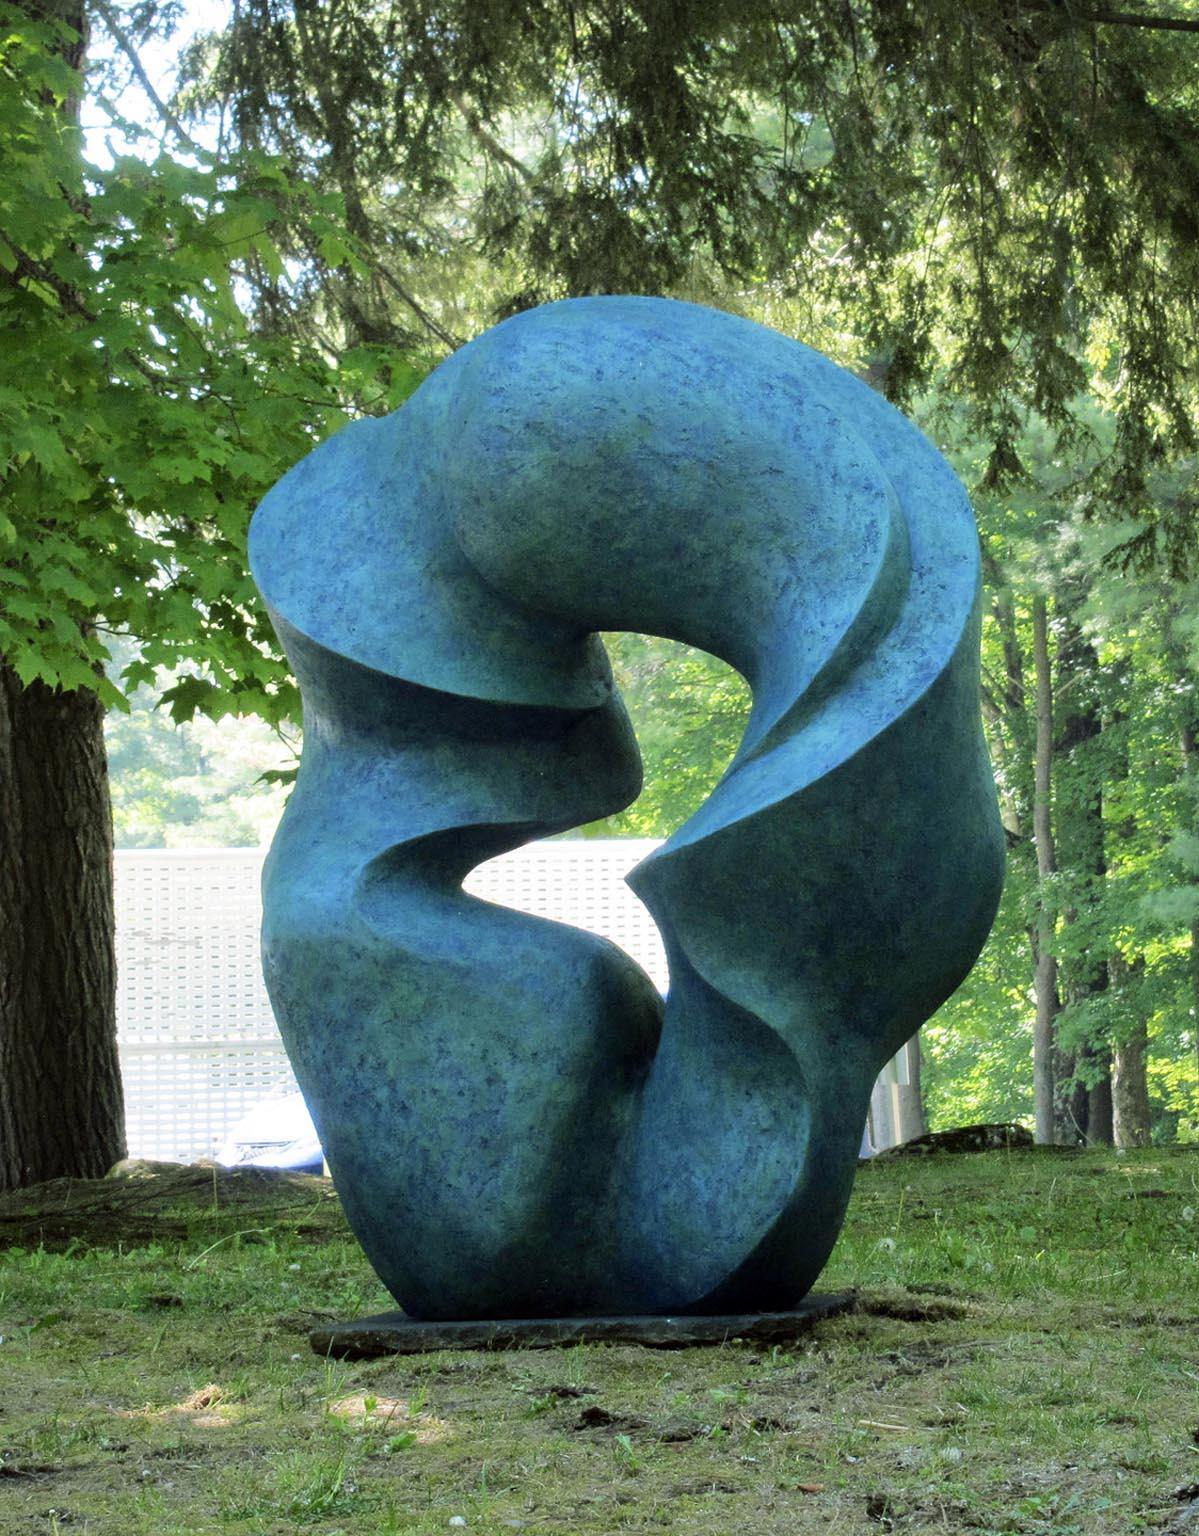 Water course - Sculpture by Elaine Lorenz